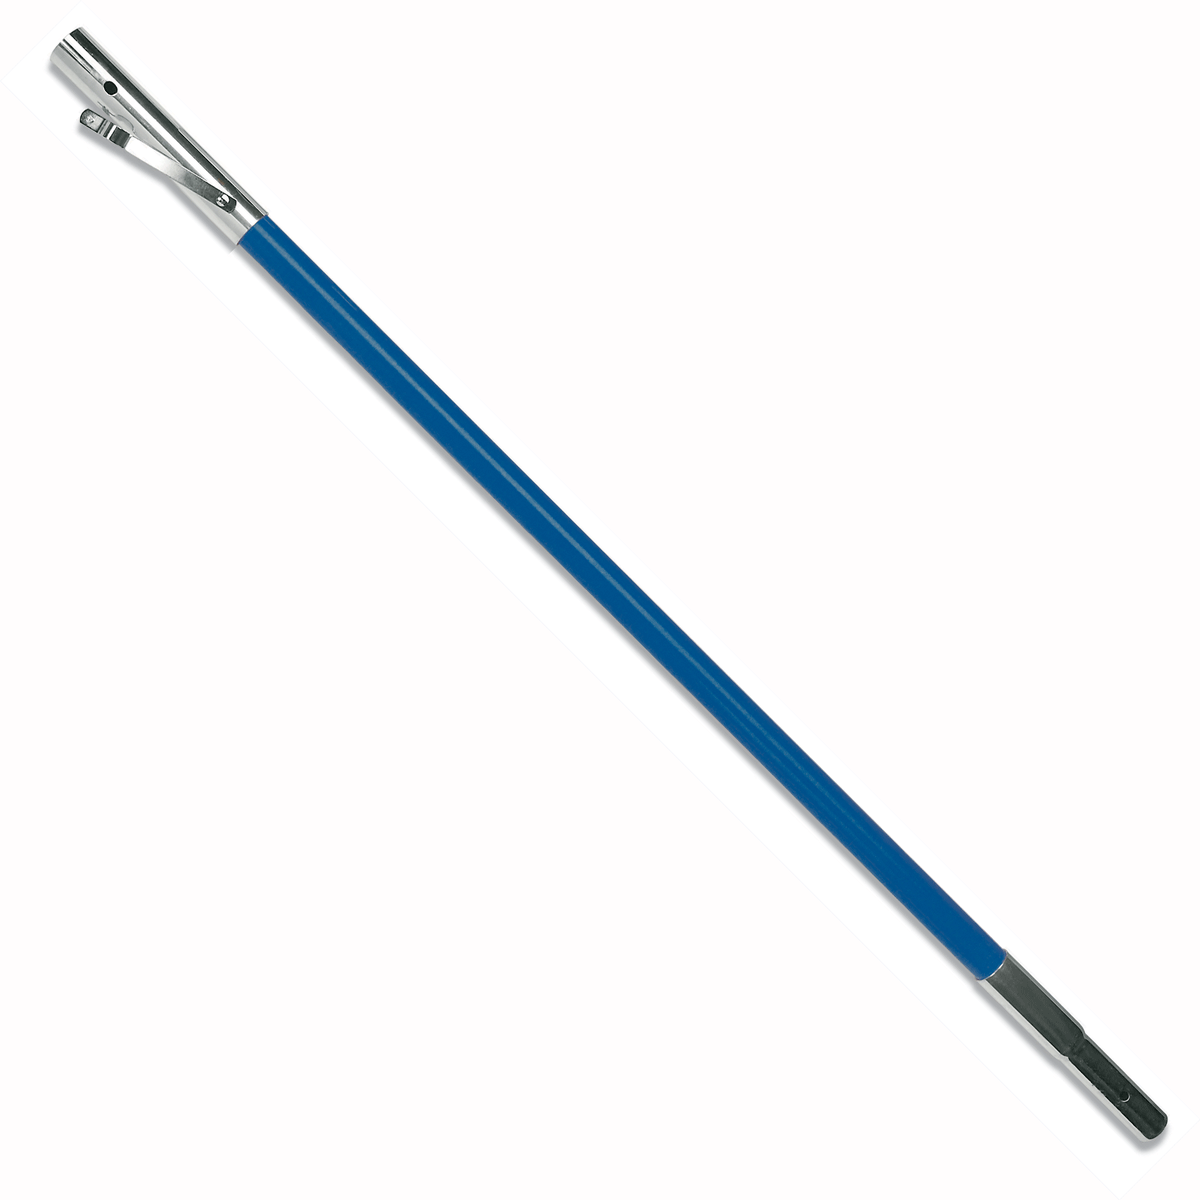 Stein 76cm Fibreglass Pole